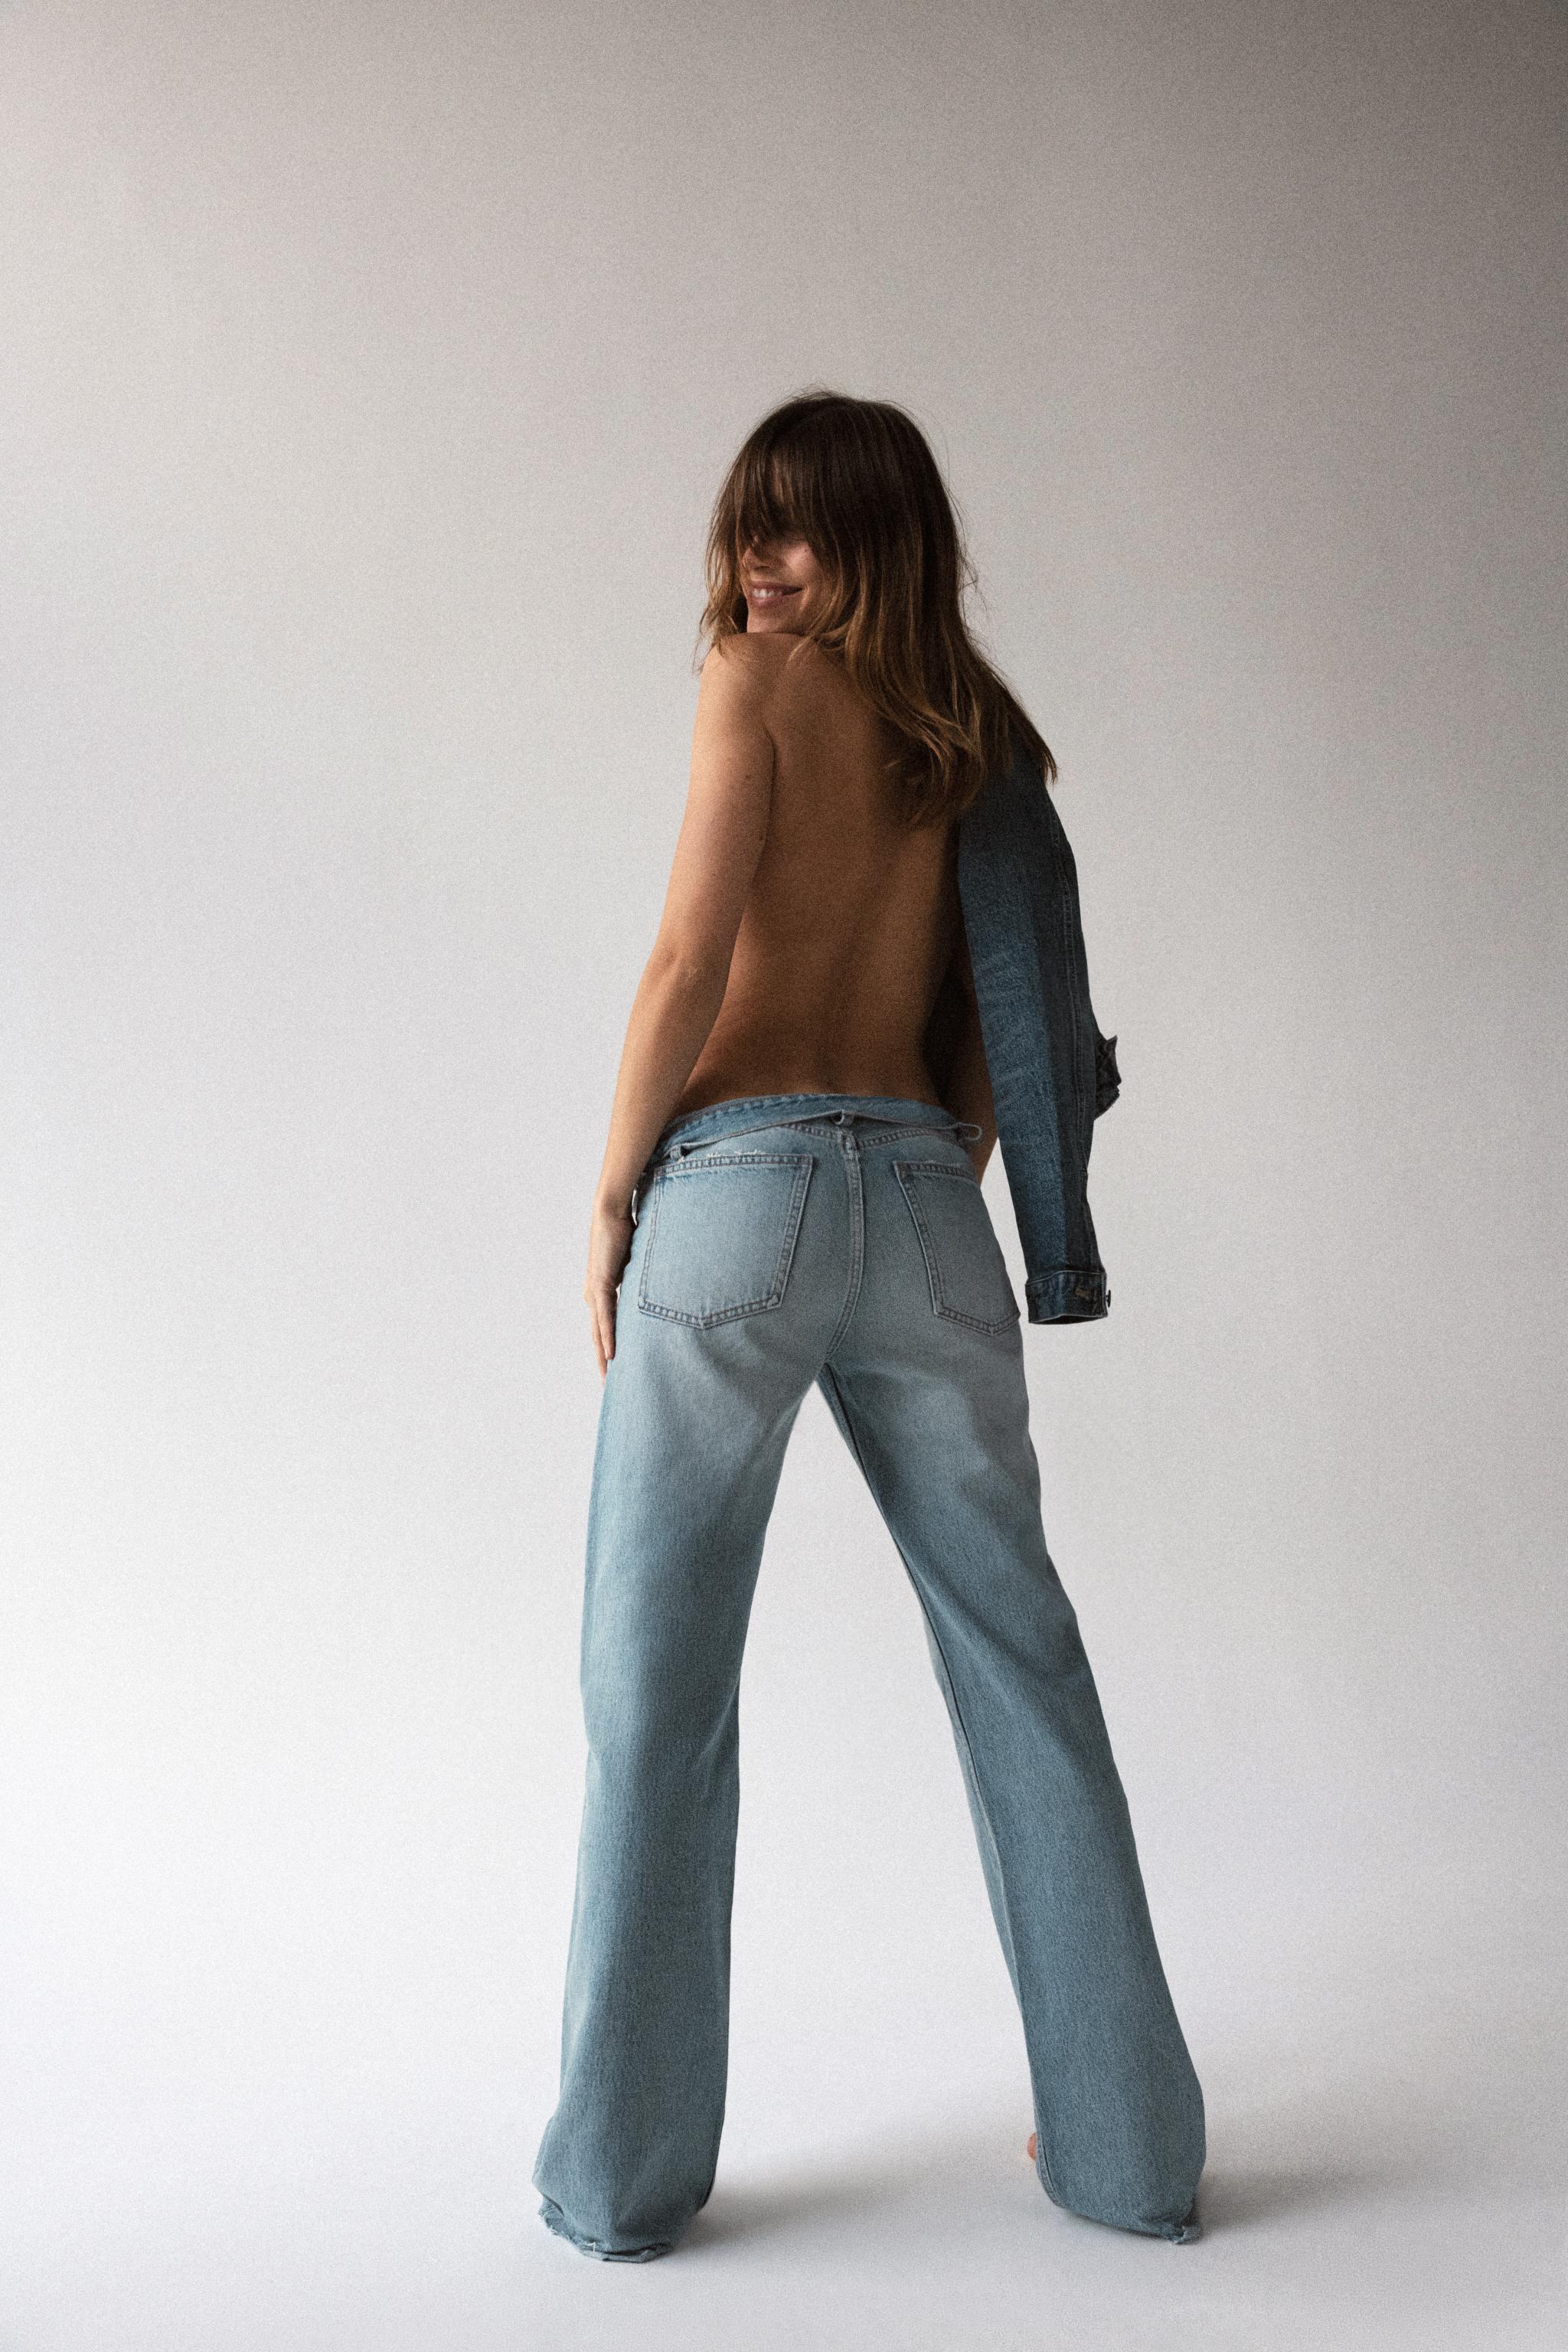 Zara Double Waist Jeans.